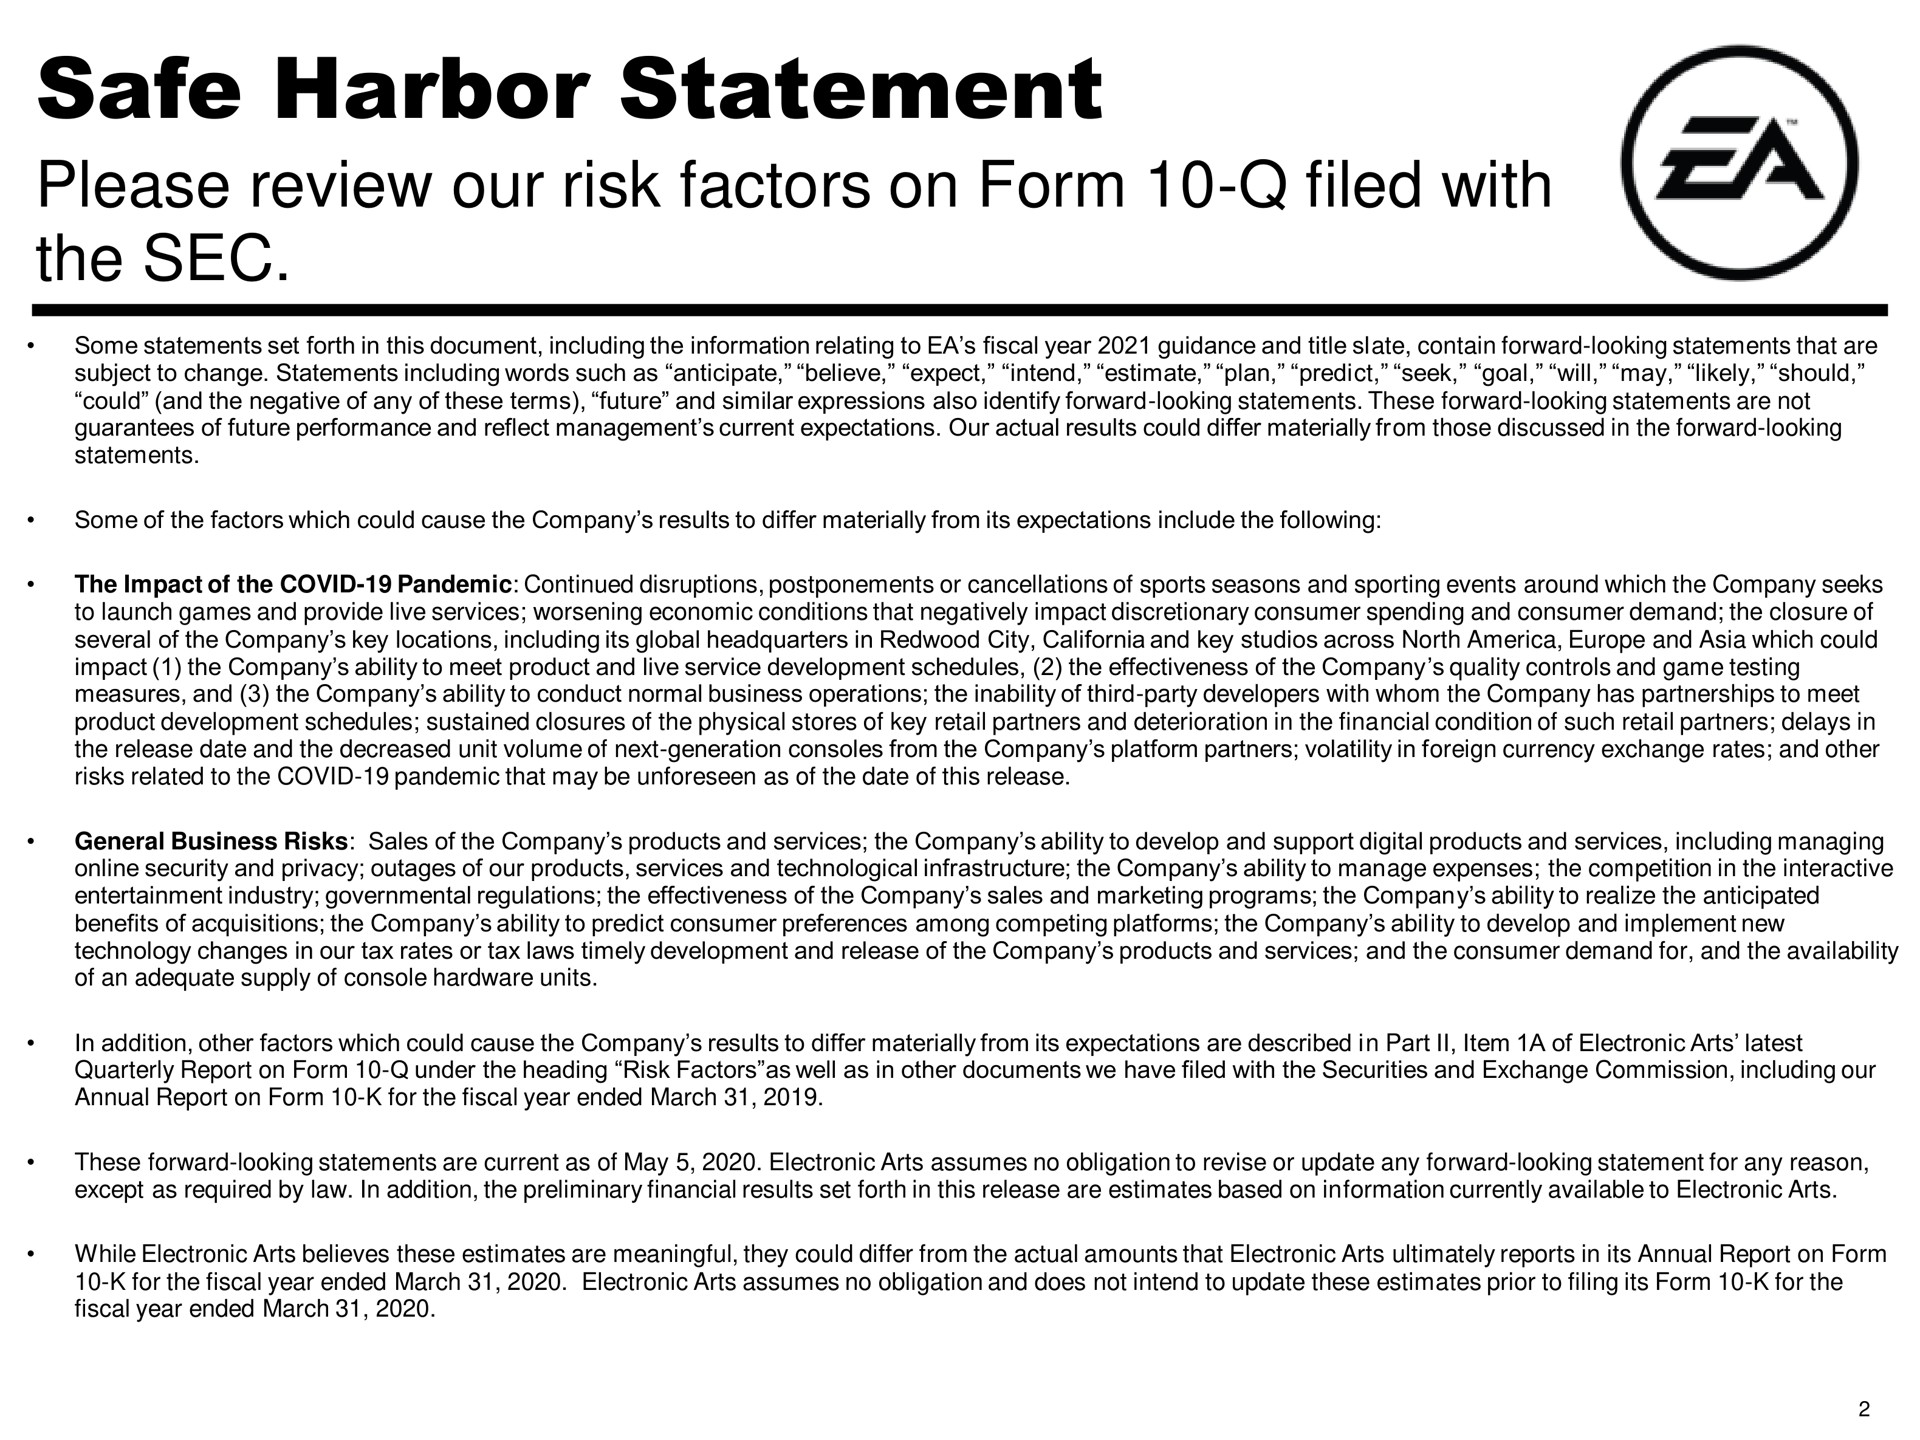 safe harbor statement | Electronic Arts